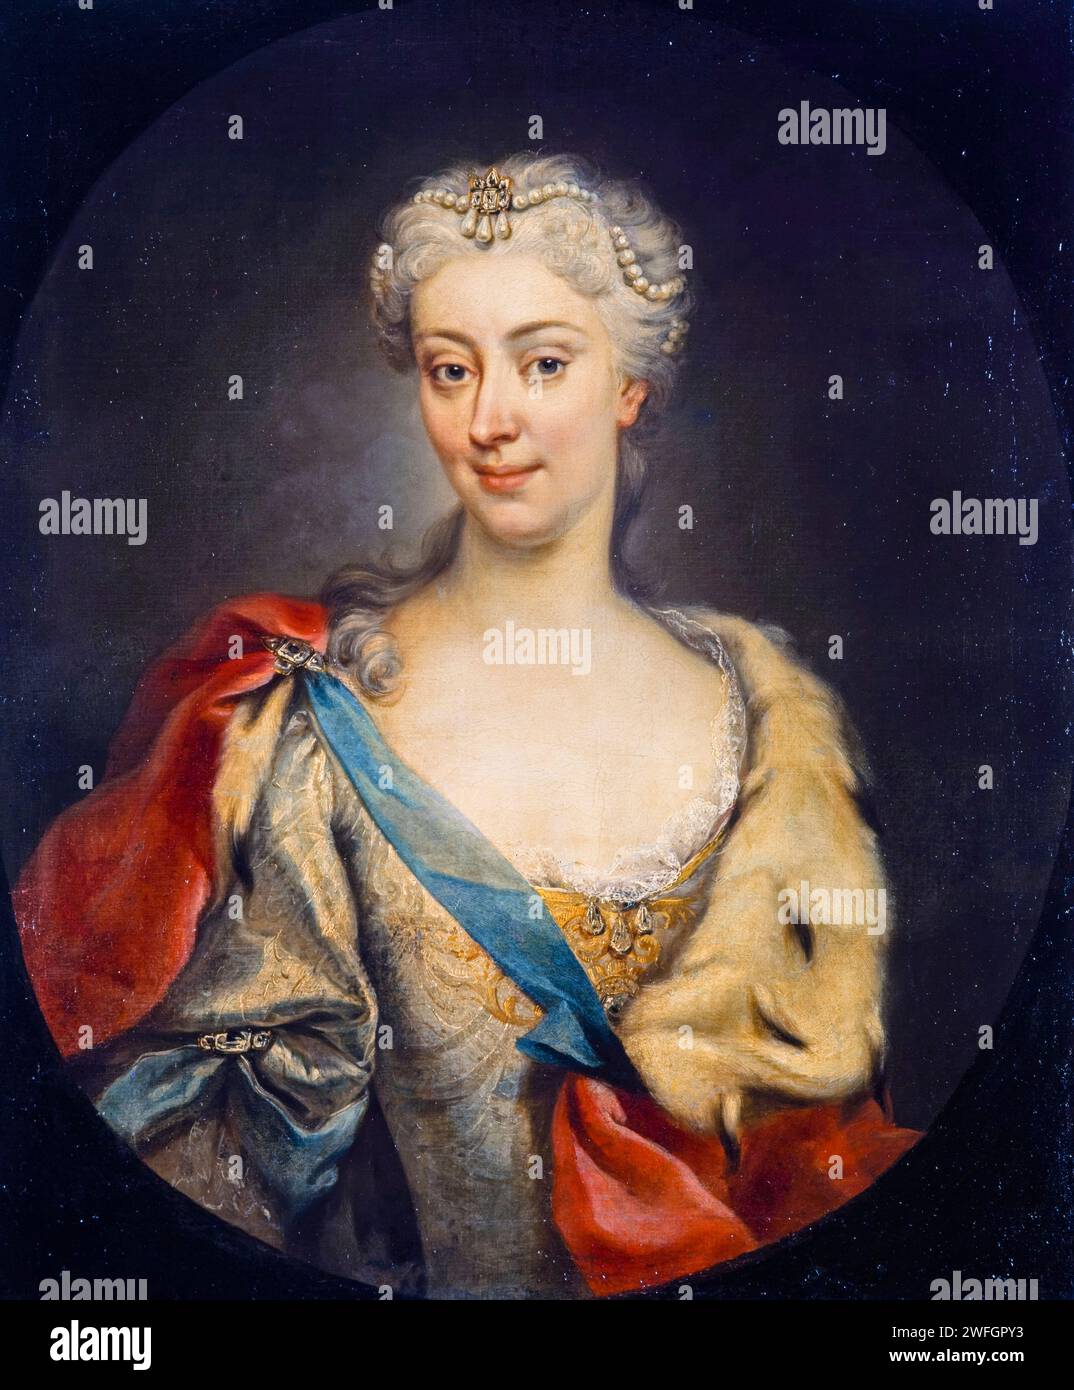 Maria Clementina Sobieska (1702-1735), regina titolare d'Inghilterra, Scozia e Irlanda, ritratto dipinto ad olio su tela dopo Martin van Meytens, 1727-1728 Foto Stock